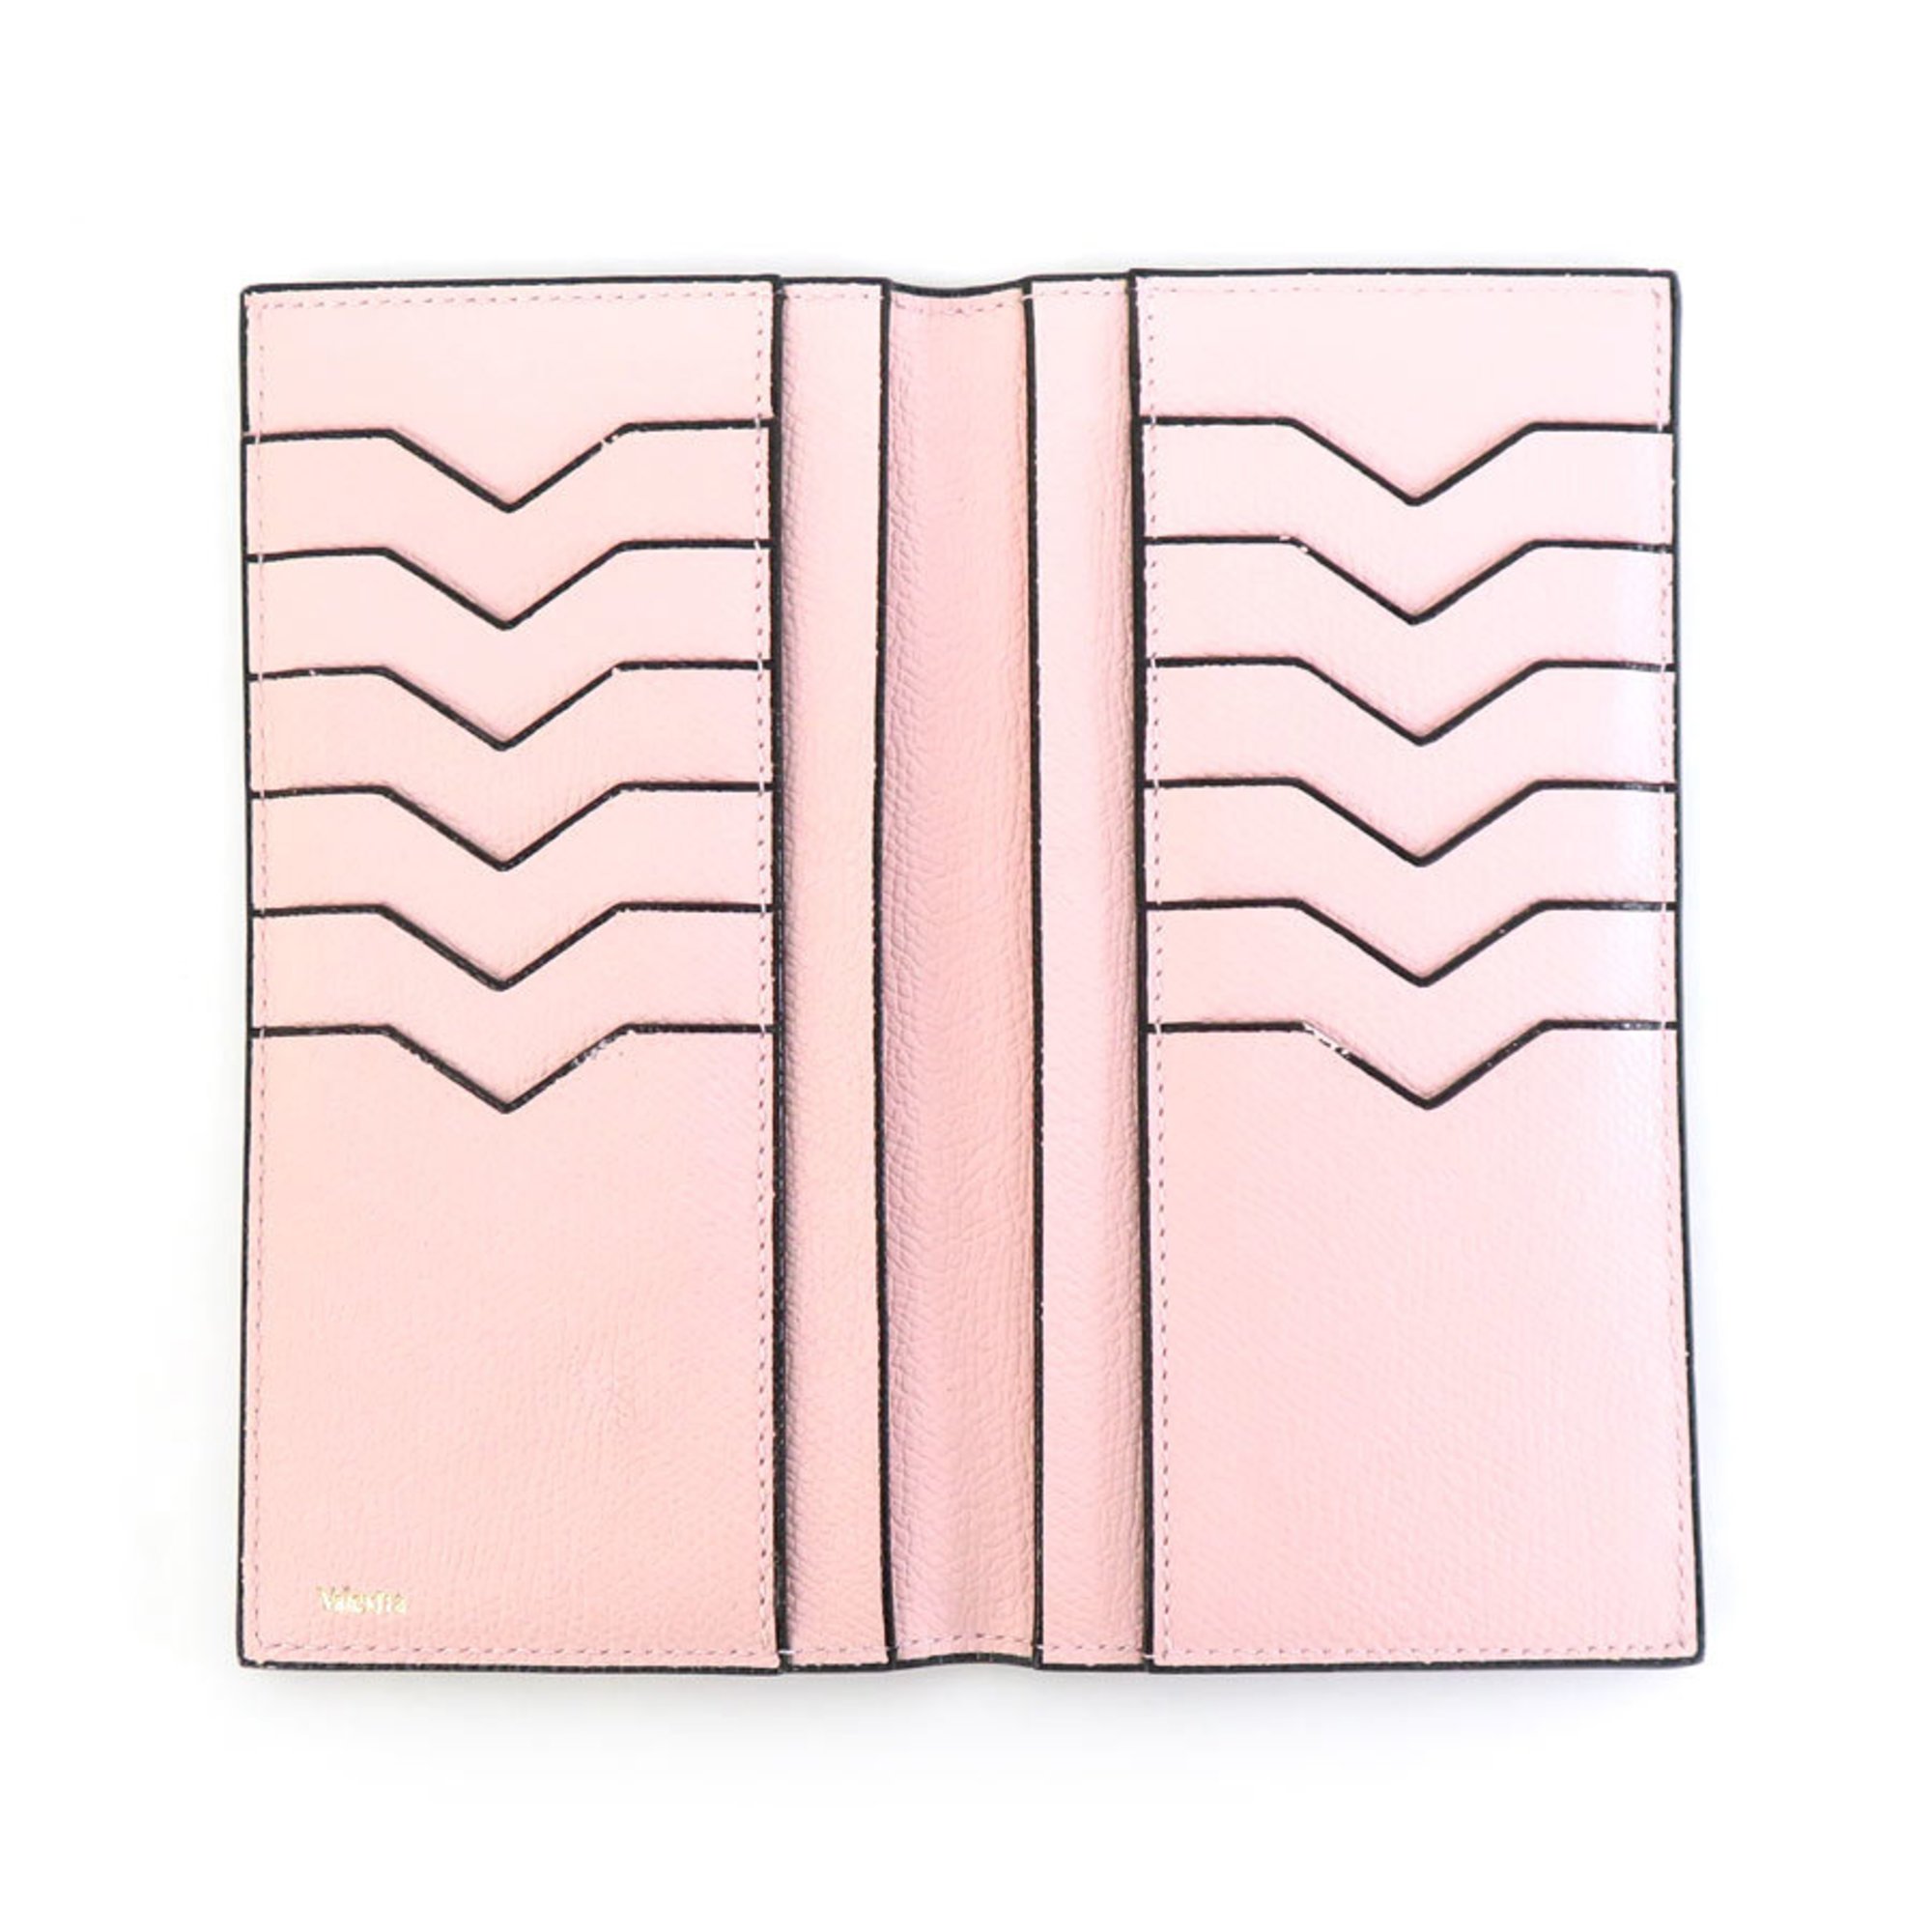 Valextra card case leather light pink unisex